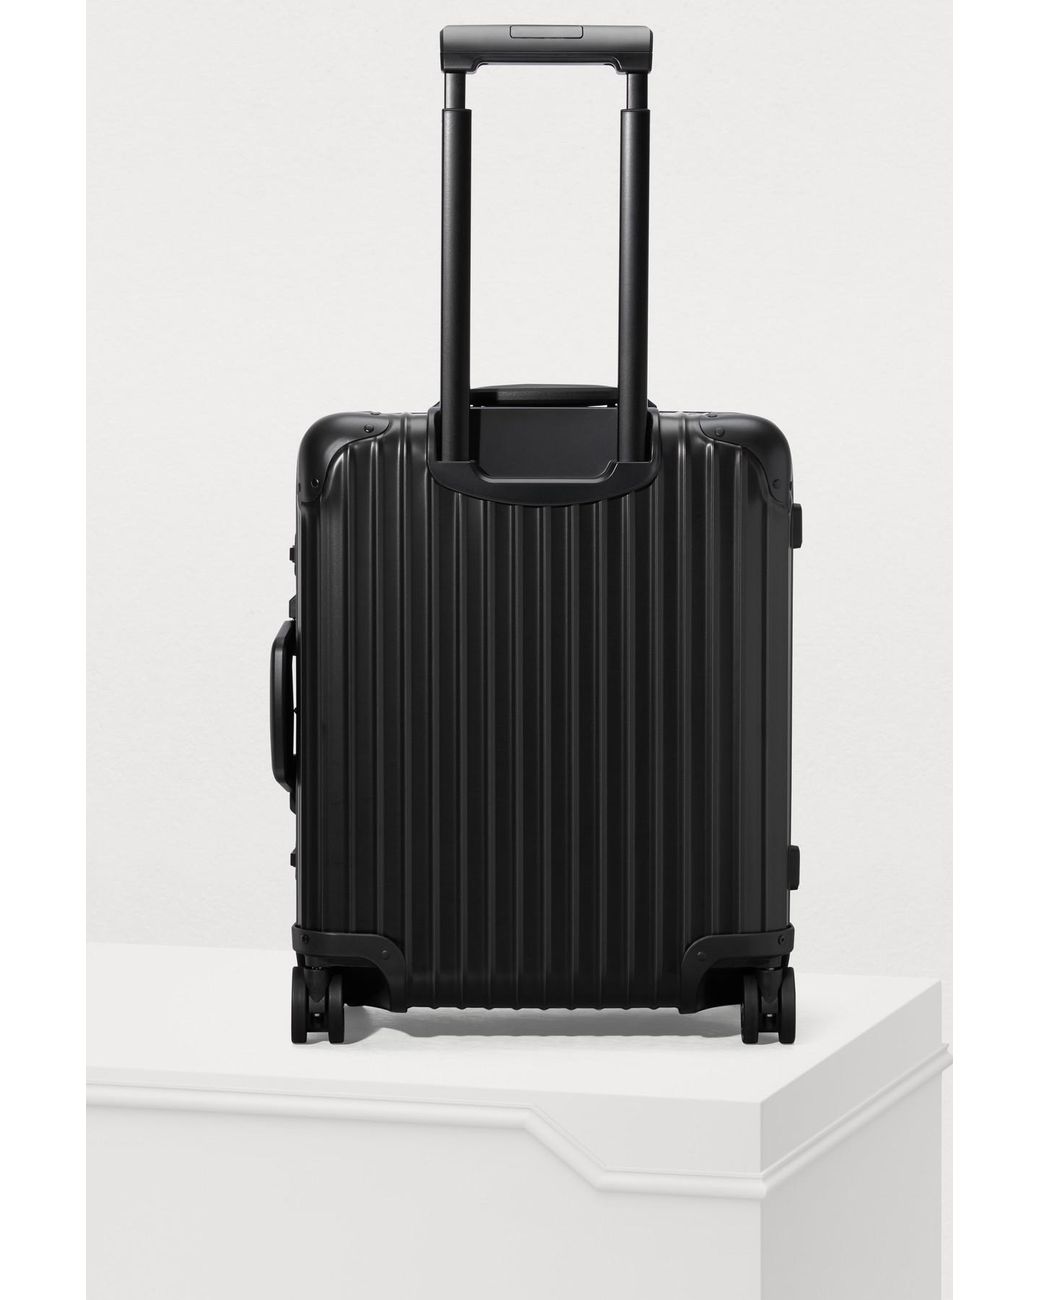 Buy Supreme Rimowa Cabin Plus Suitcase - Black at Ubuy Malaysia